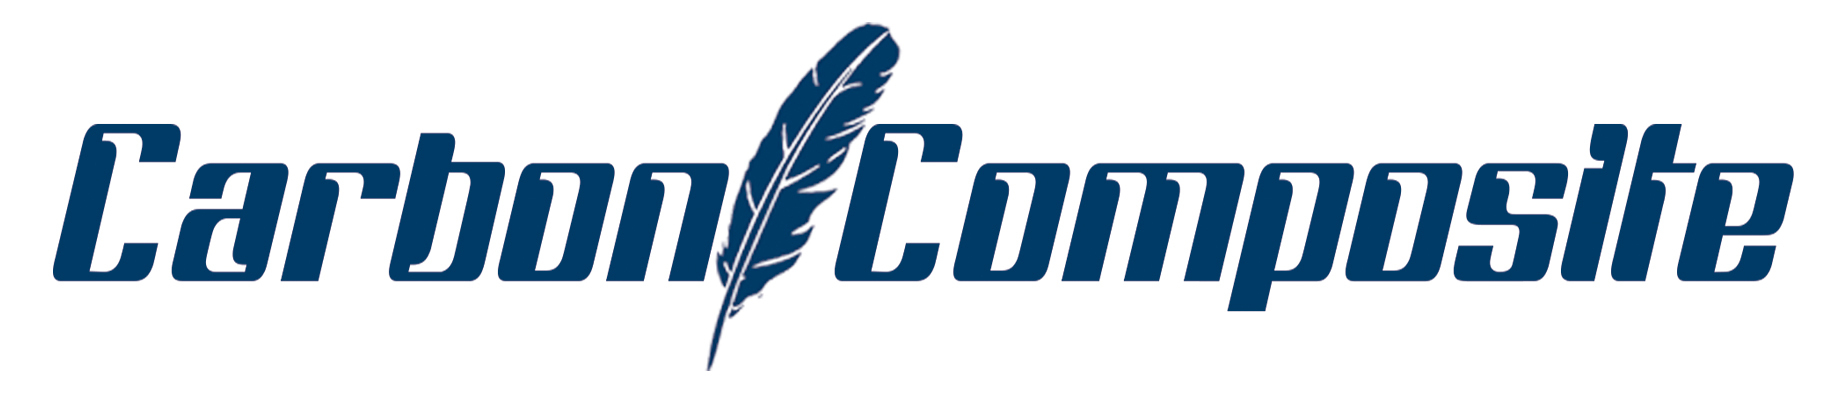 logo_carbon